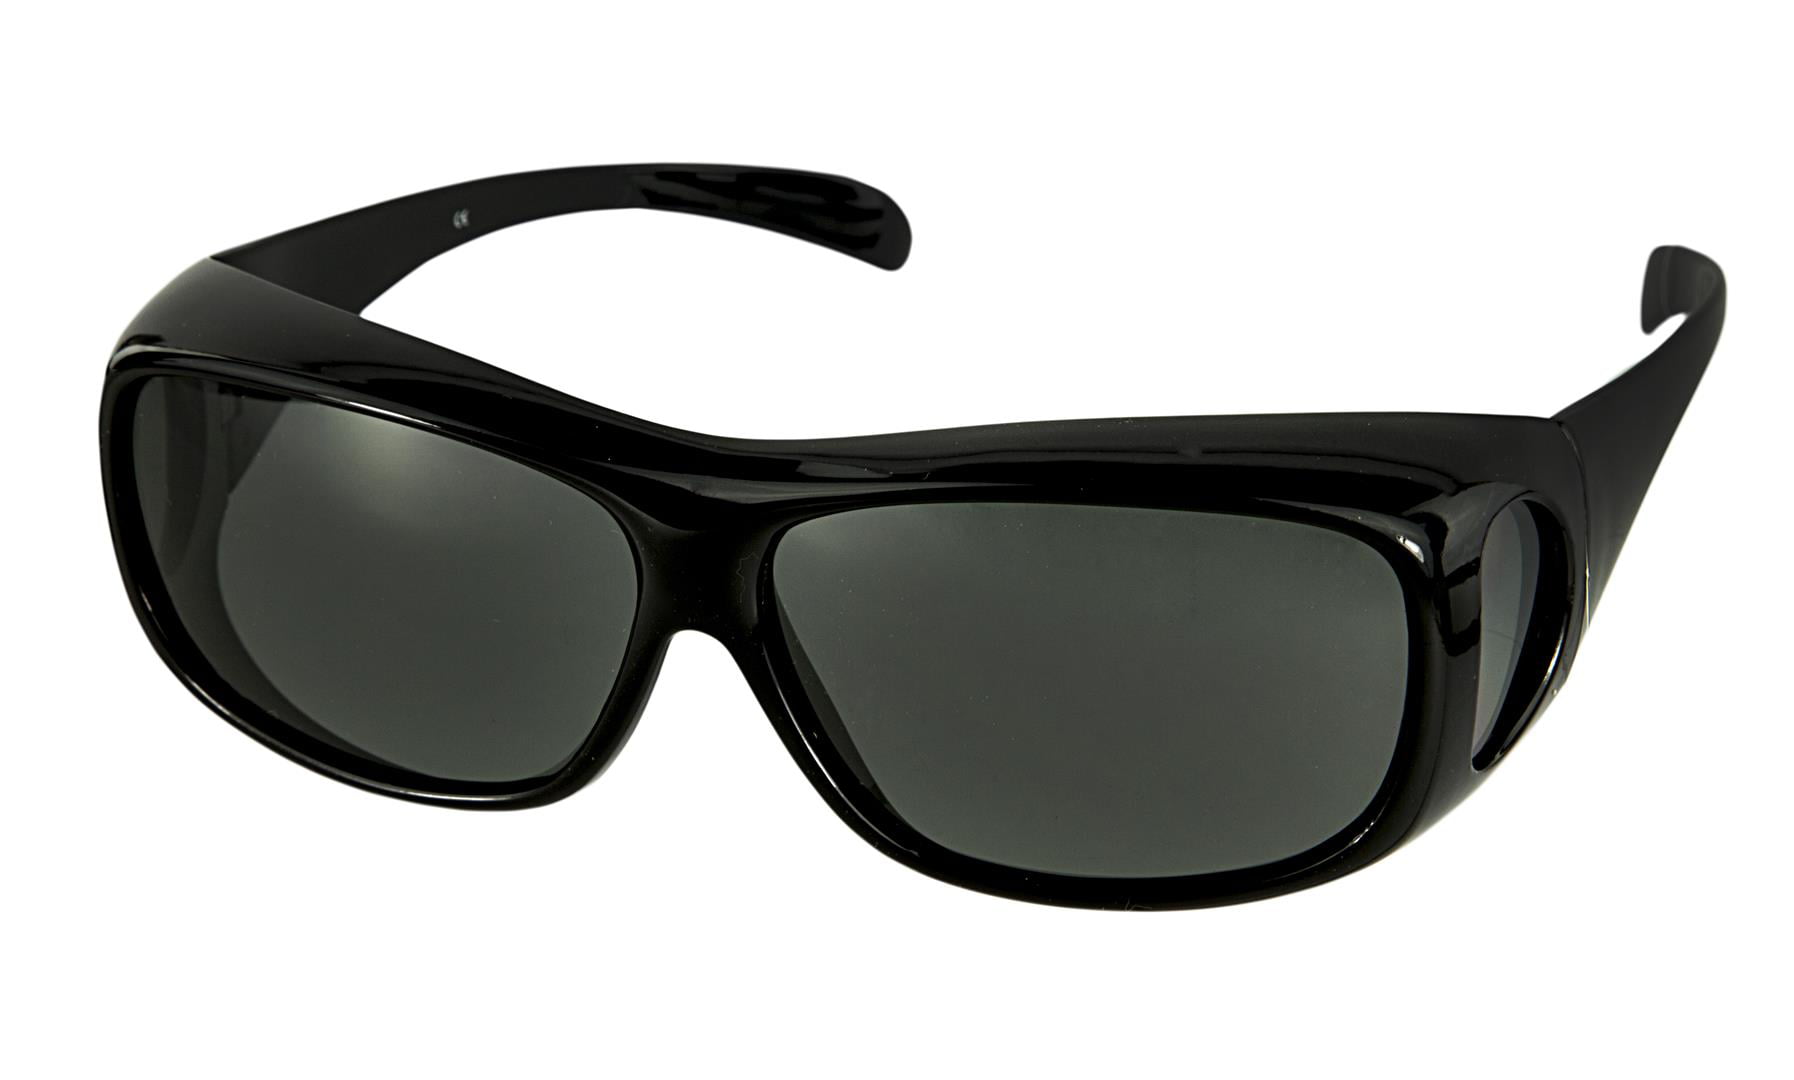 LensCovers Sunglasses Wear Over Prescription Glasses Extra Small Black Polarized 